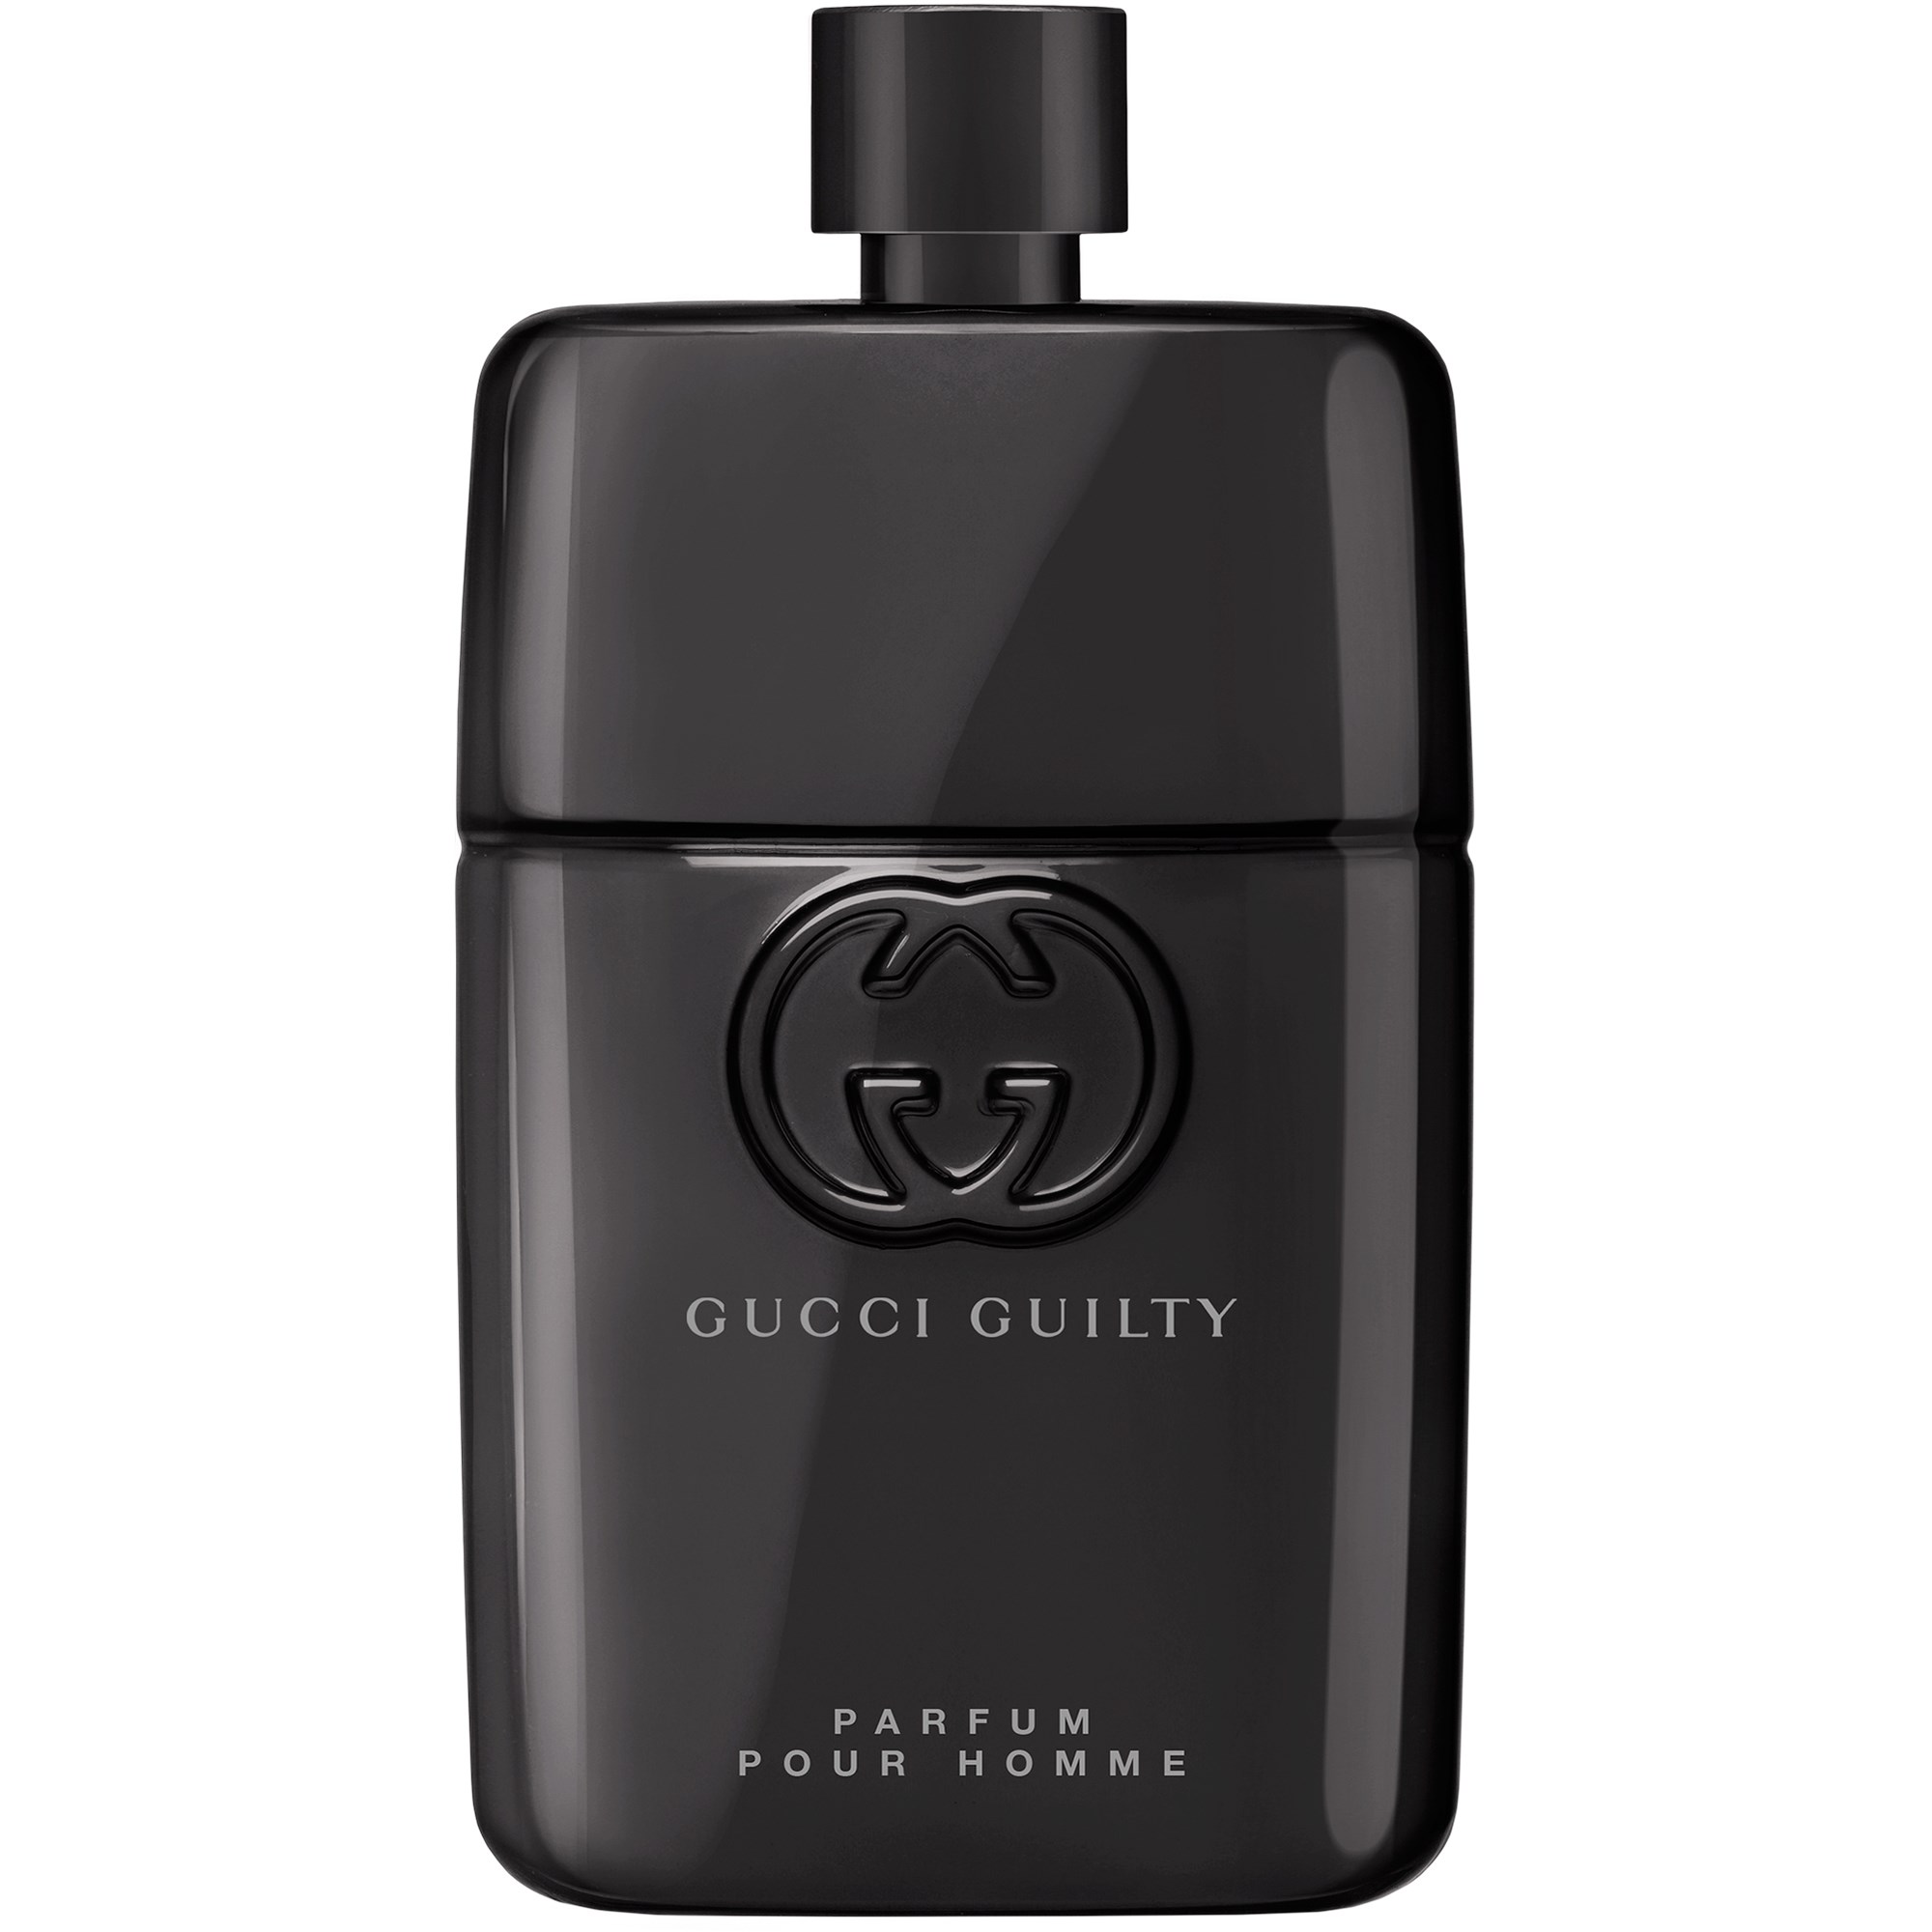 Zdjęcia - Perfuma męska GUCCI Guilty Parfum Pour Homme 150 ml 